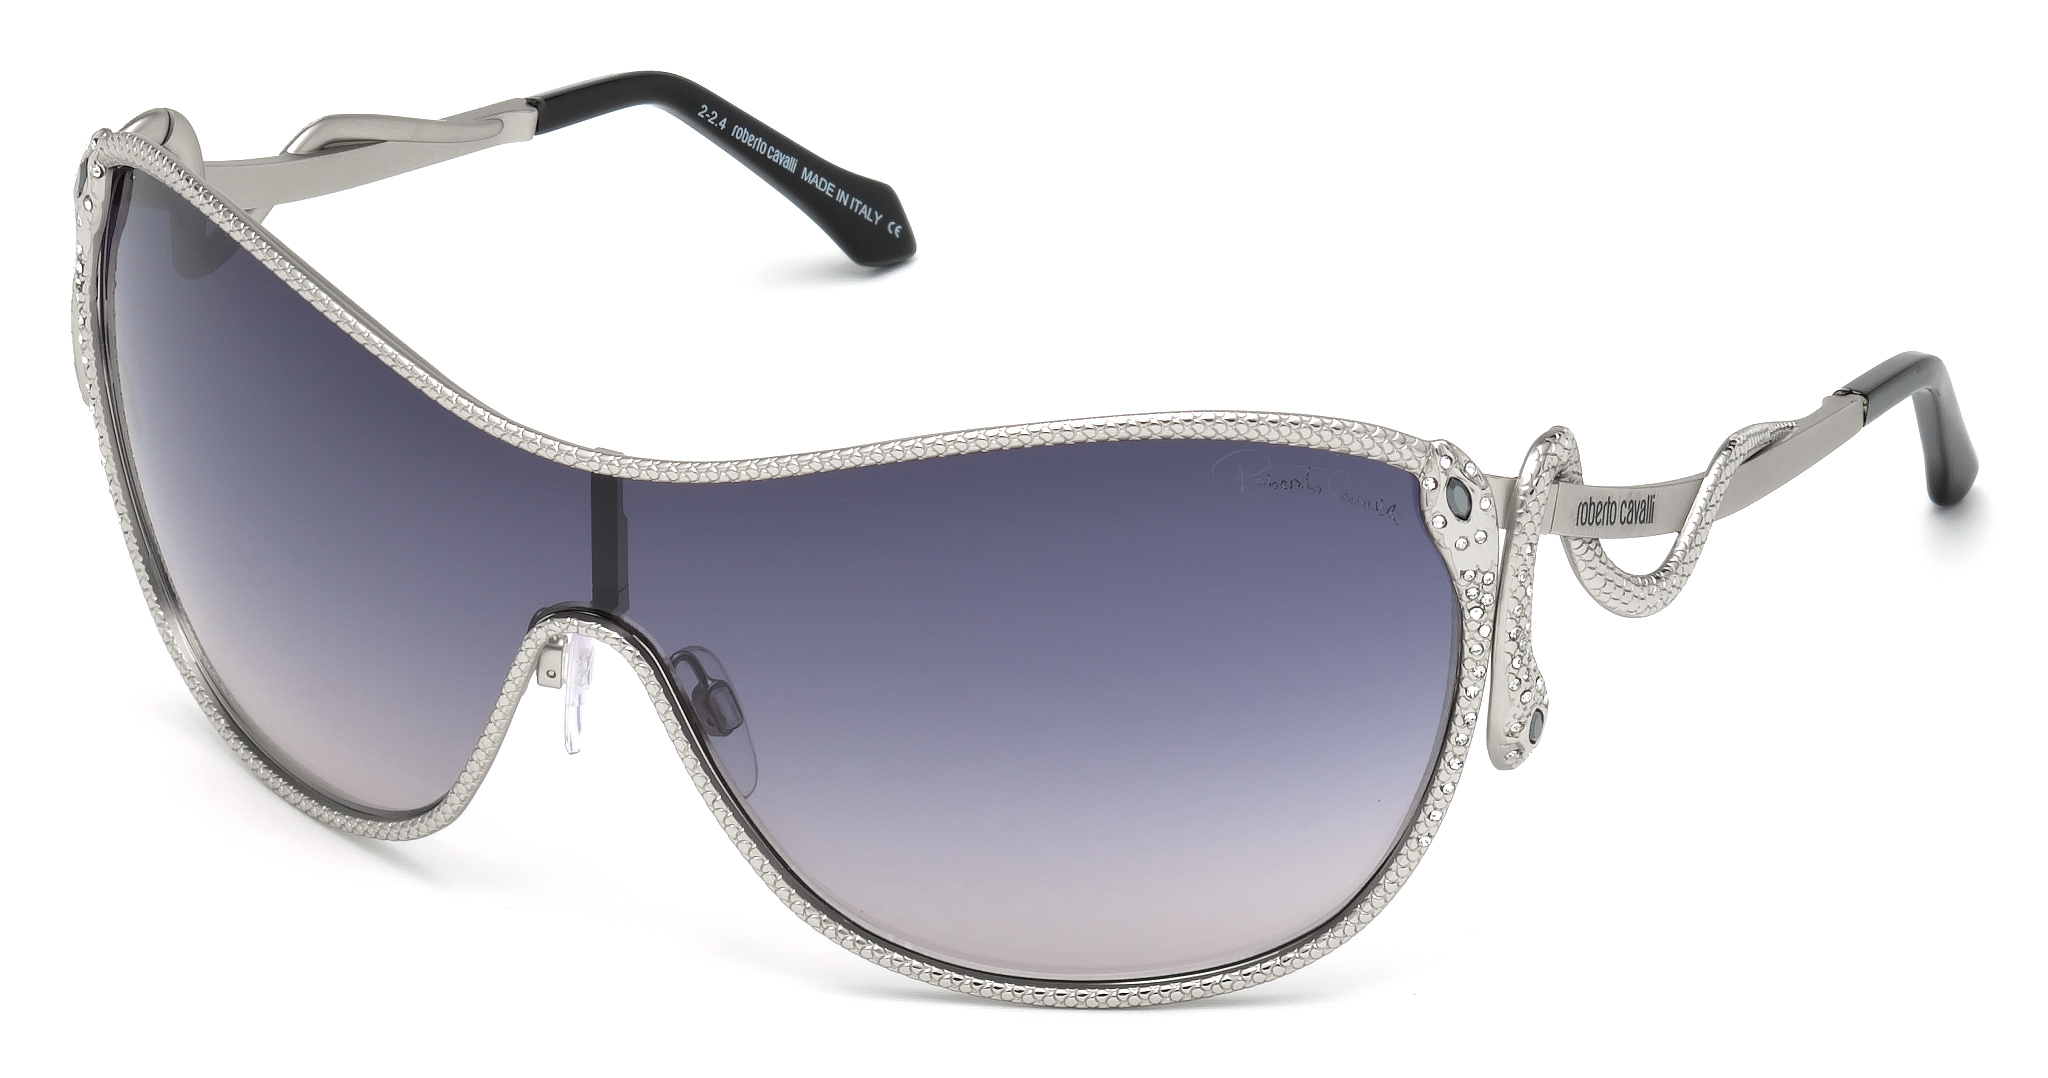 Marcolin Eyewear sunglasses Roberto Cavalli FW 15 16 (2)